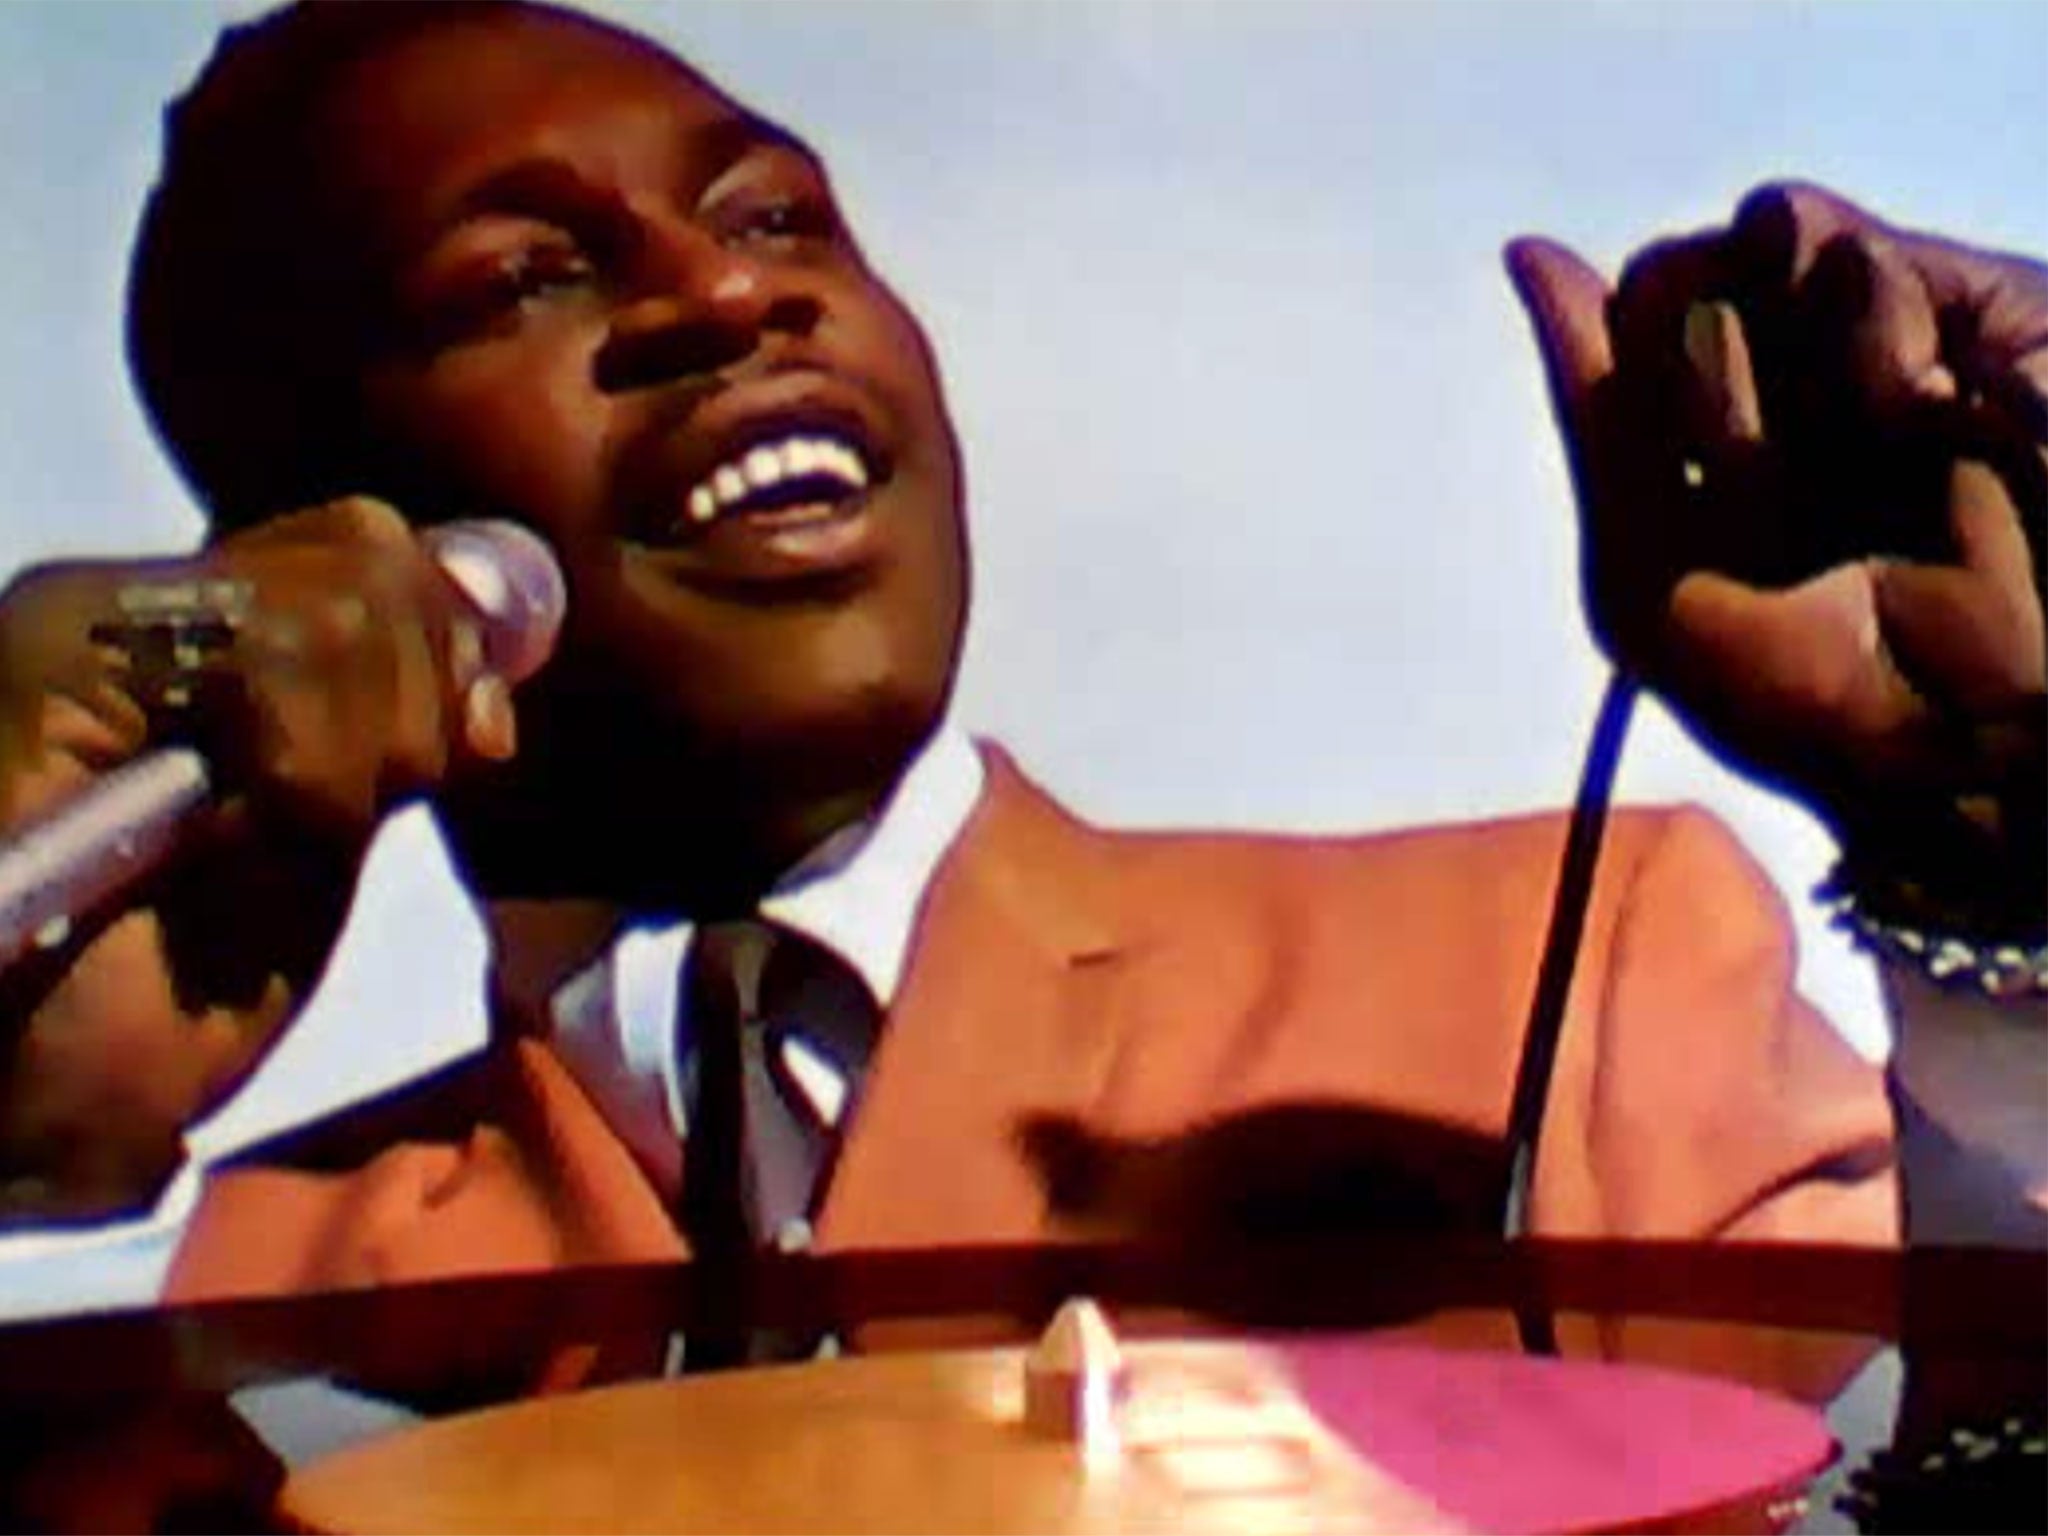 Northern Soul singer Darrell Banks died in 1970